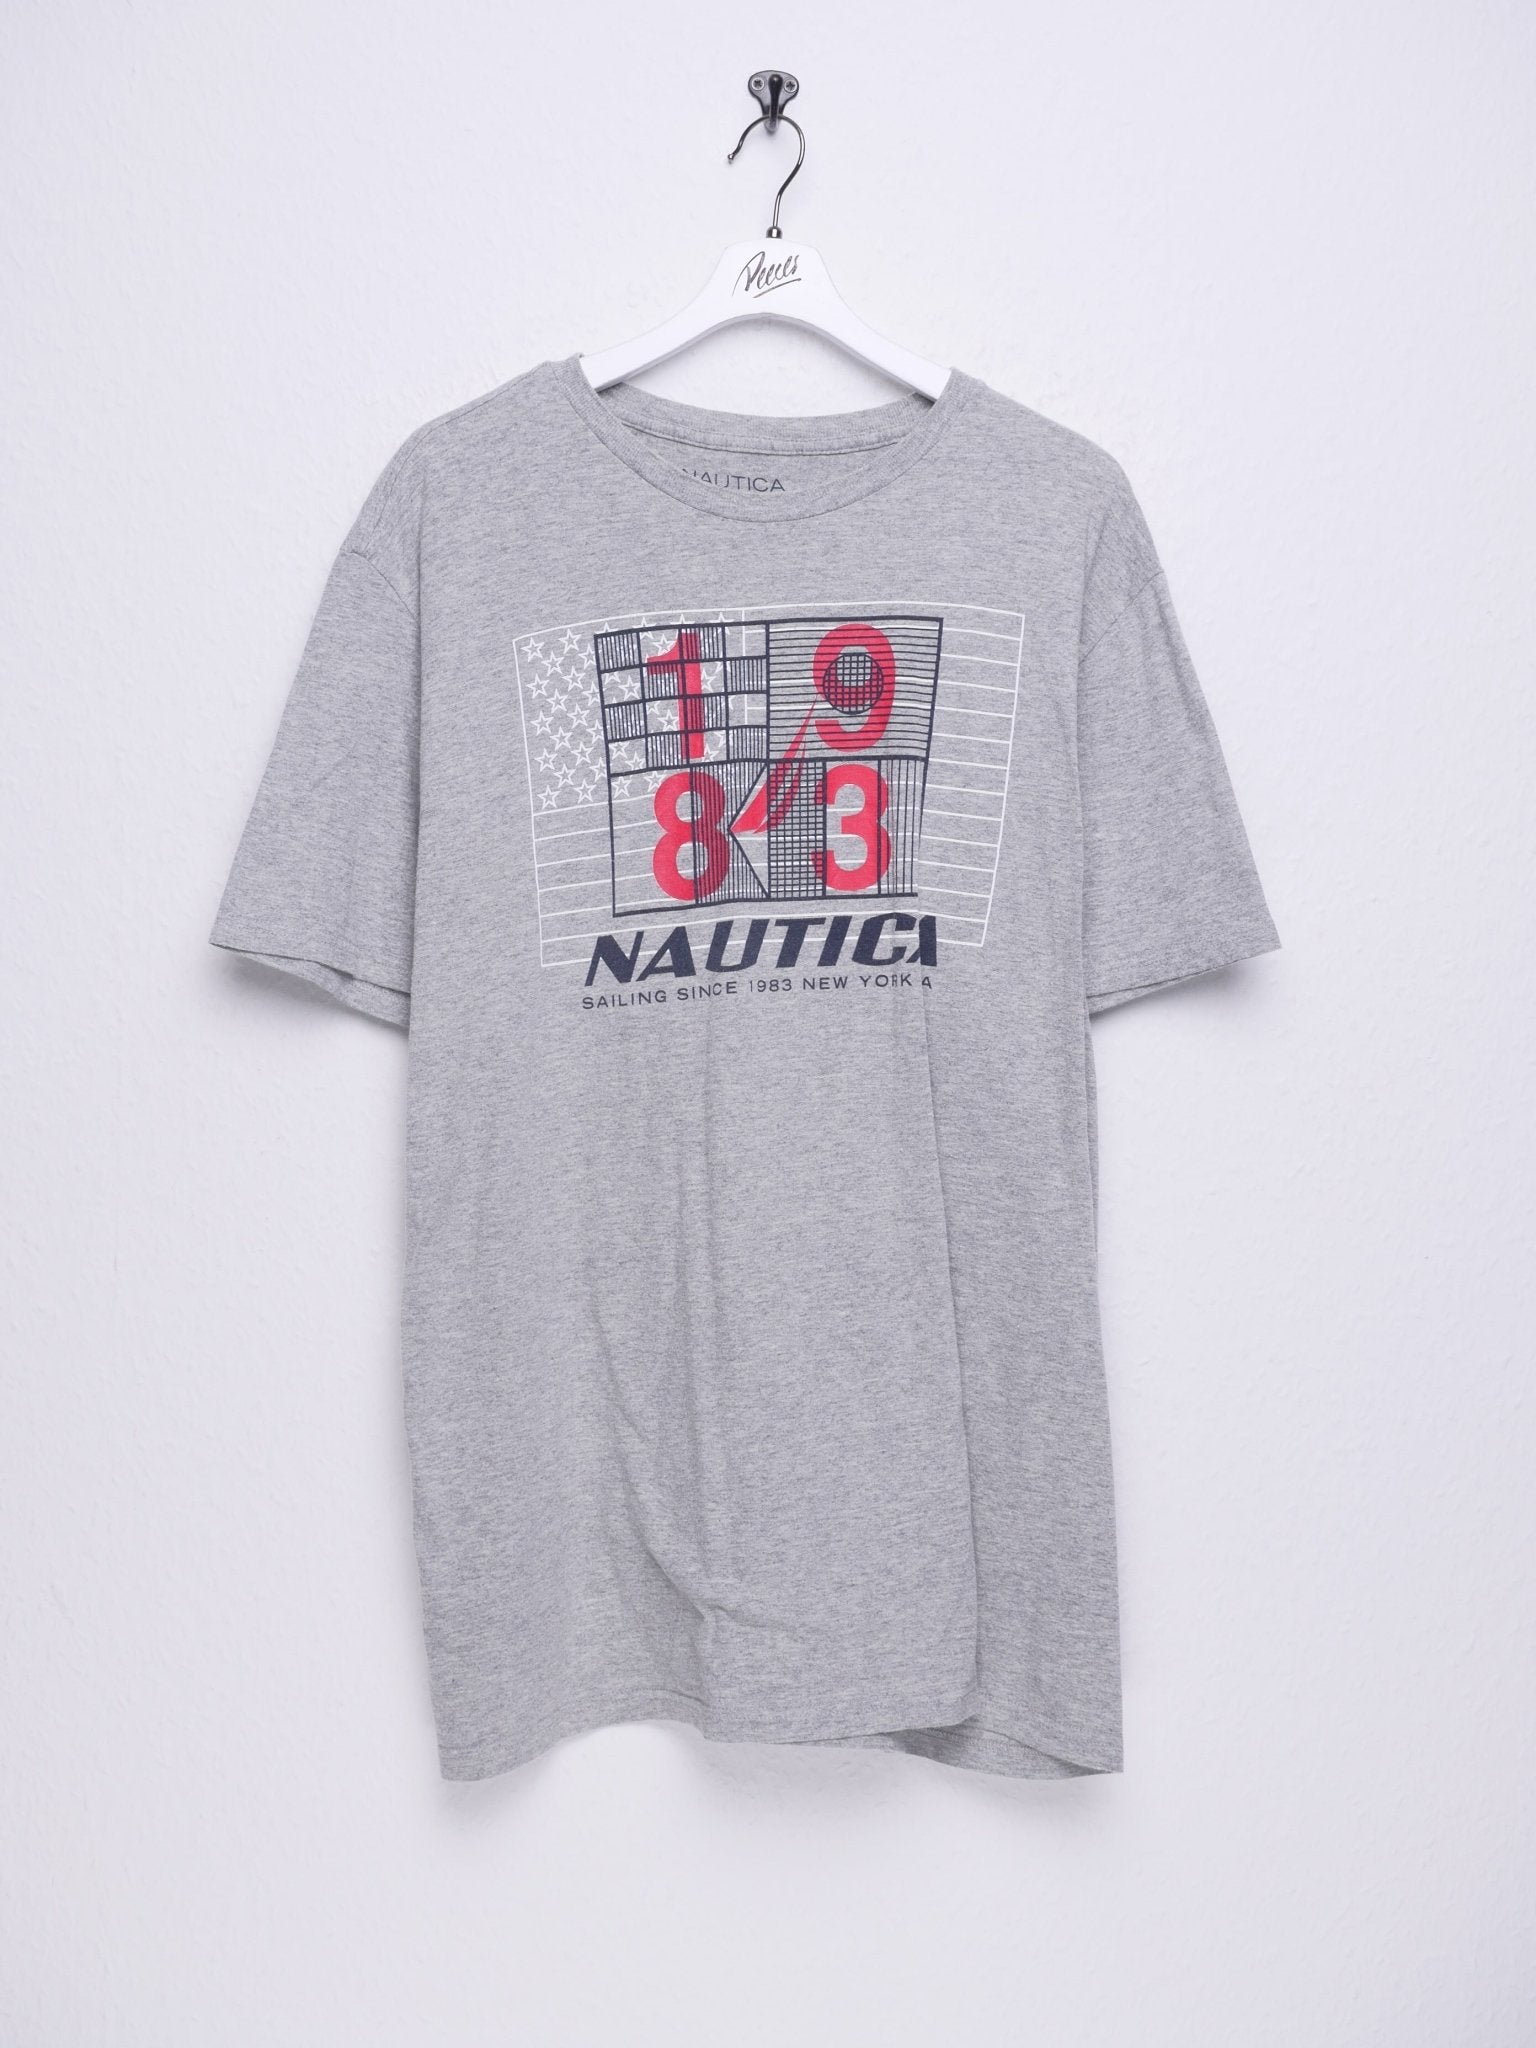 nautica printed Graphic grey Shirt - Peeces